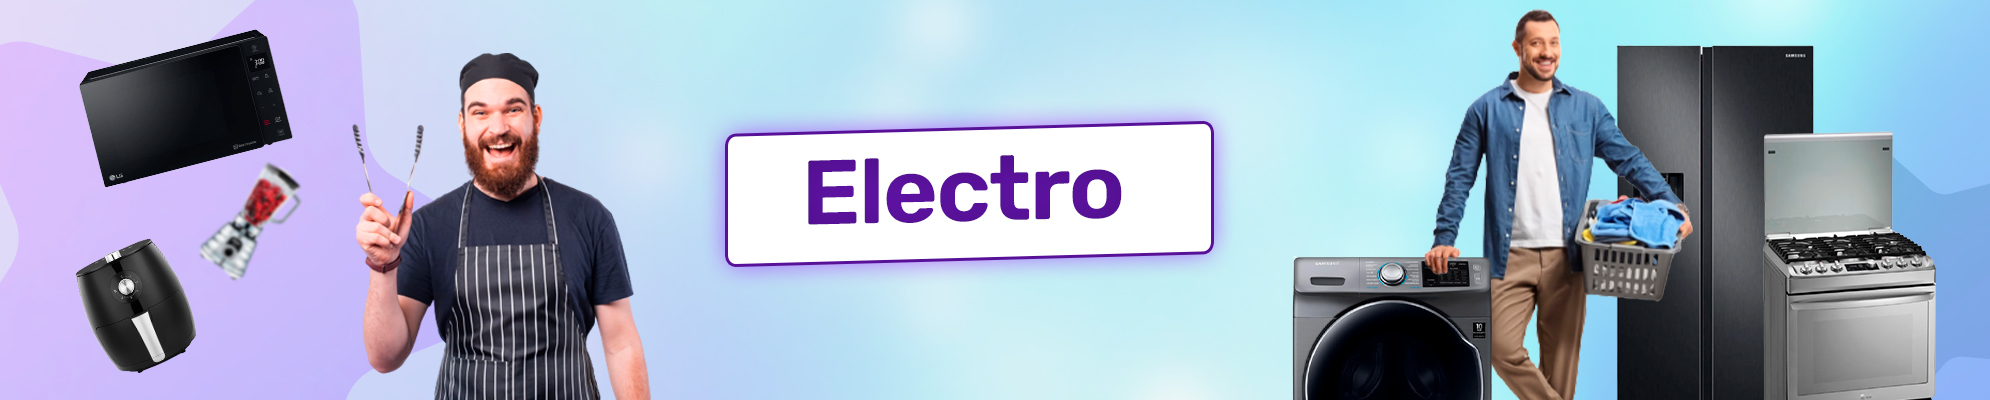 Banner Electro